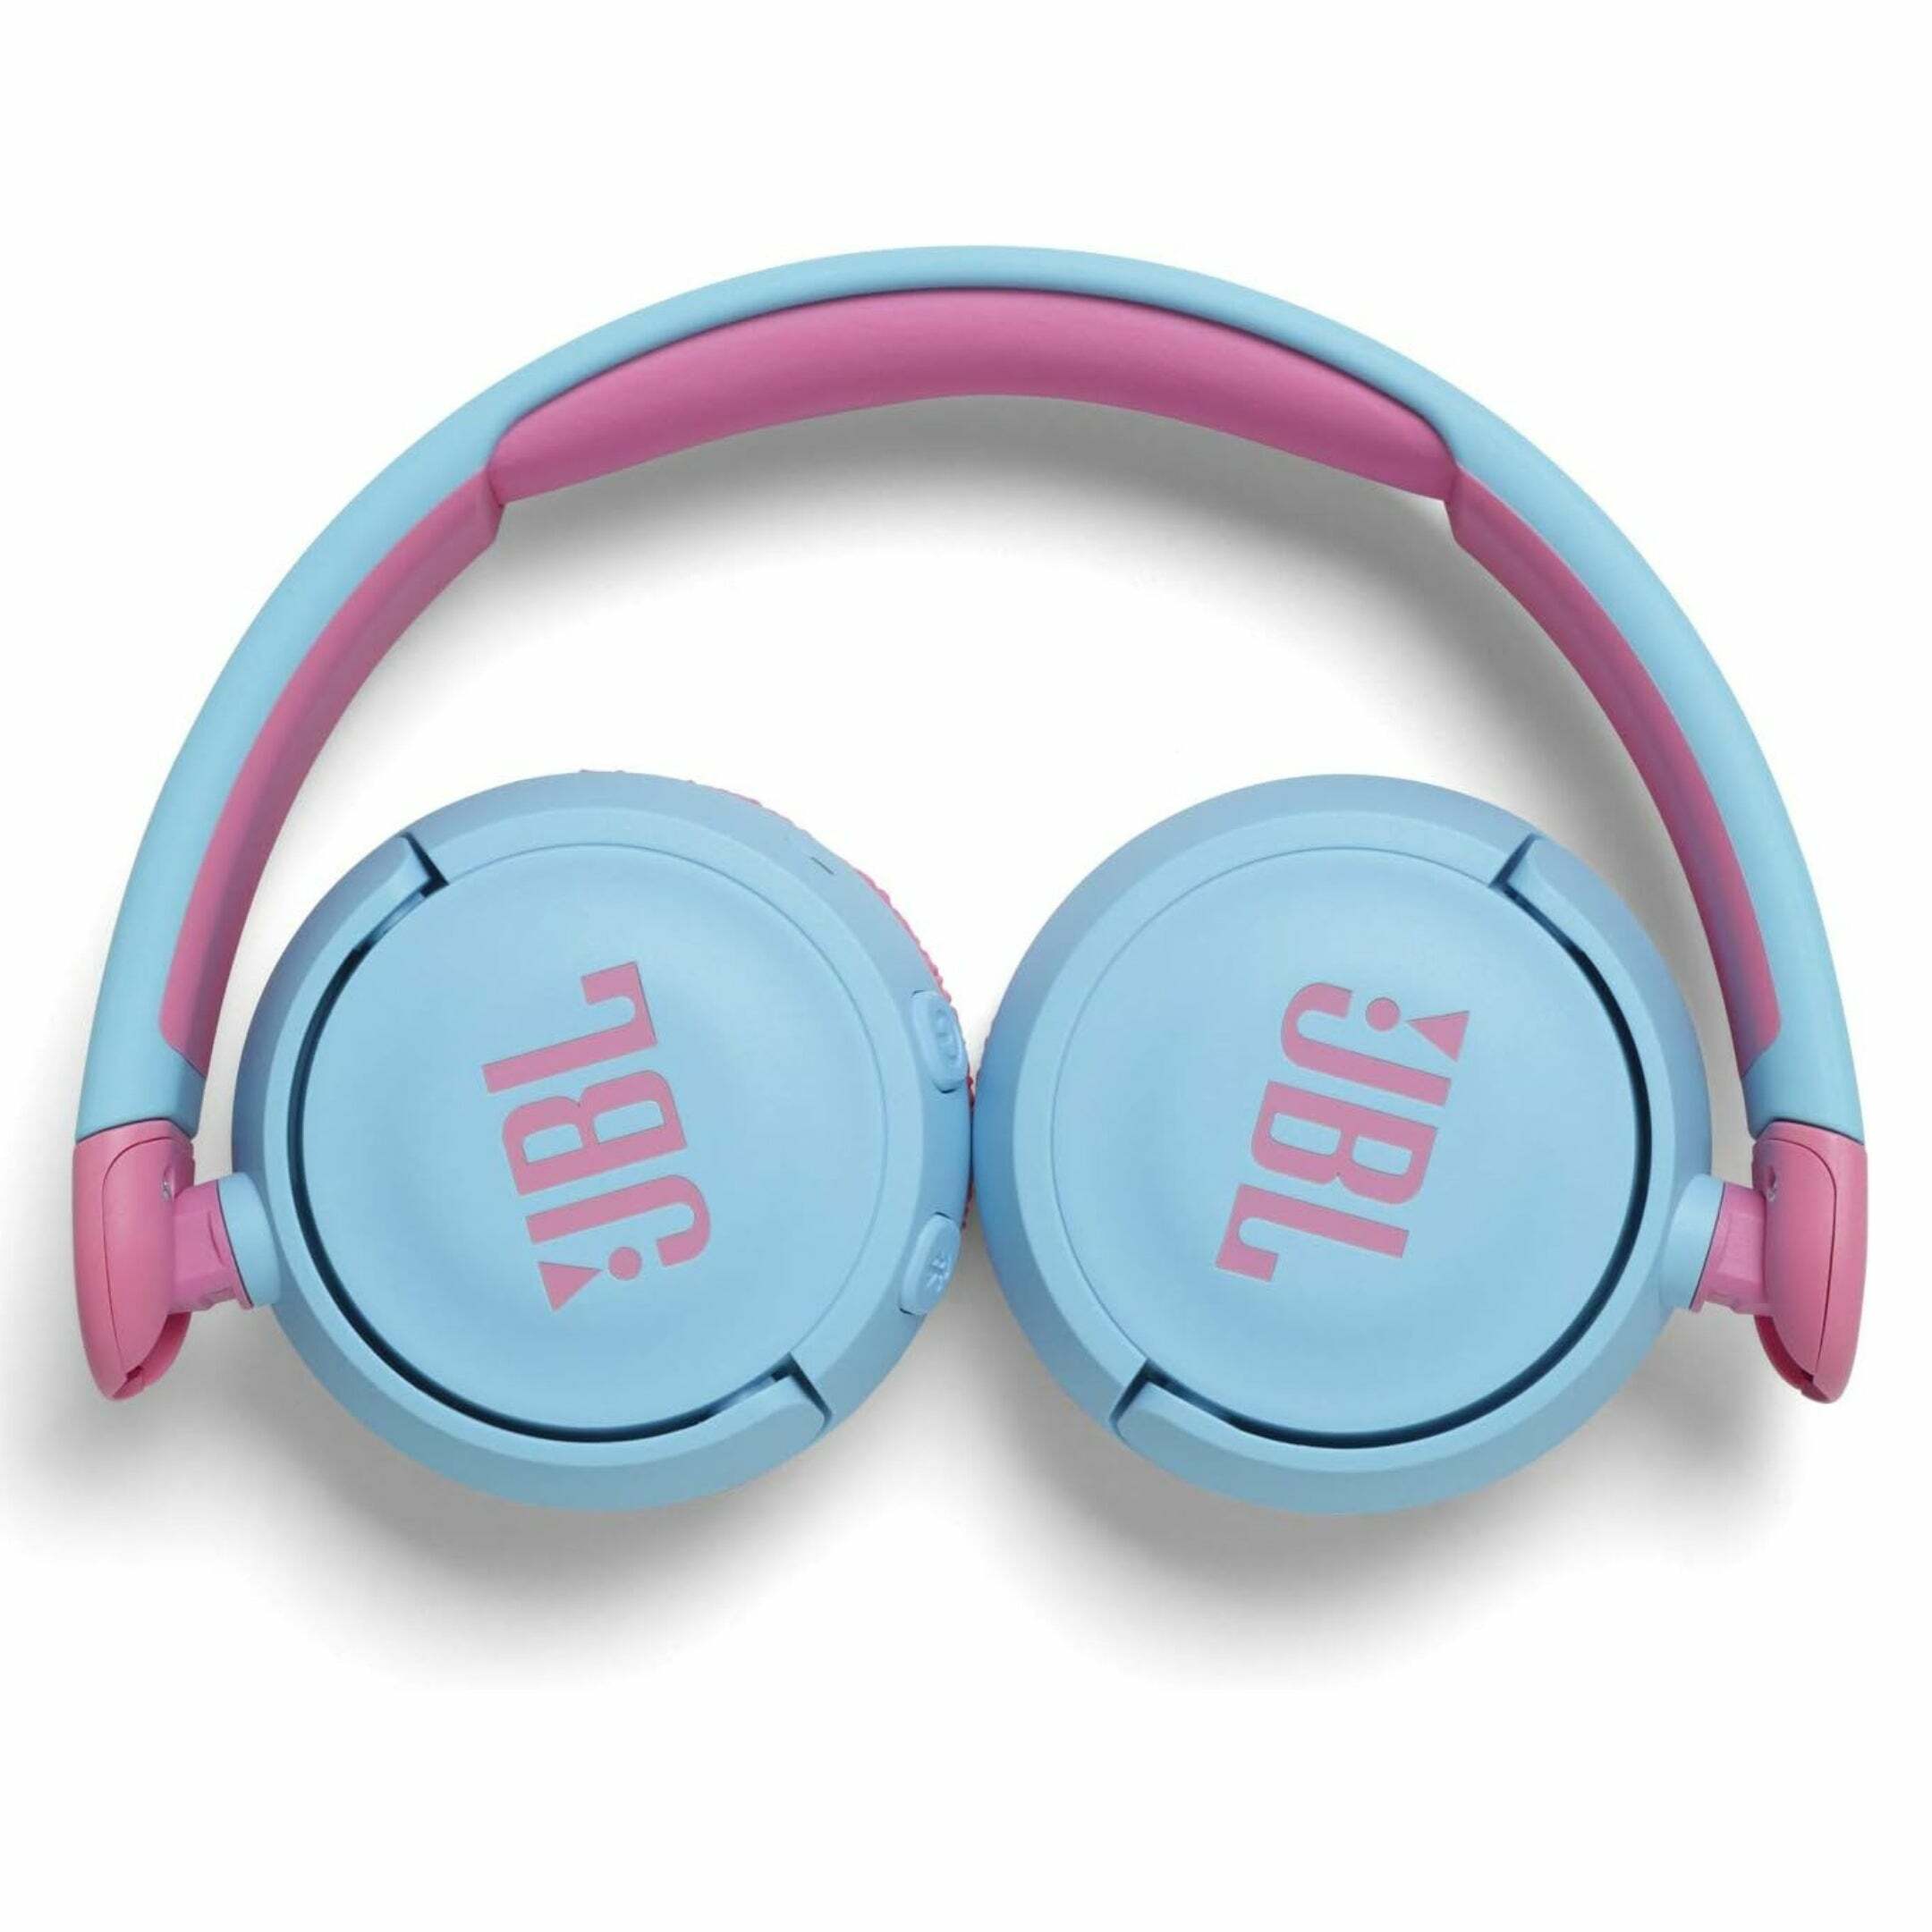 JBL JR 310BT - Kids On-Ear Wireless Bluetoth Headphones w/ Mic Blue